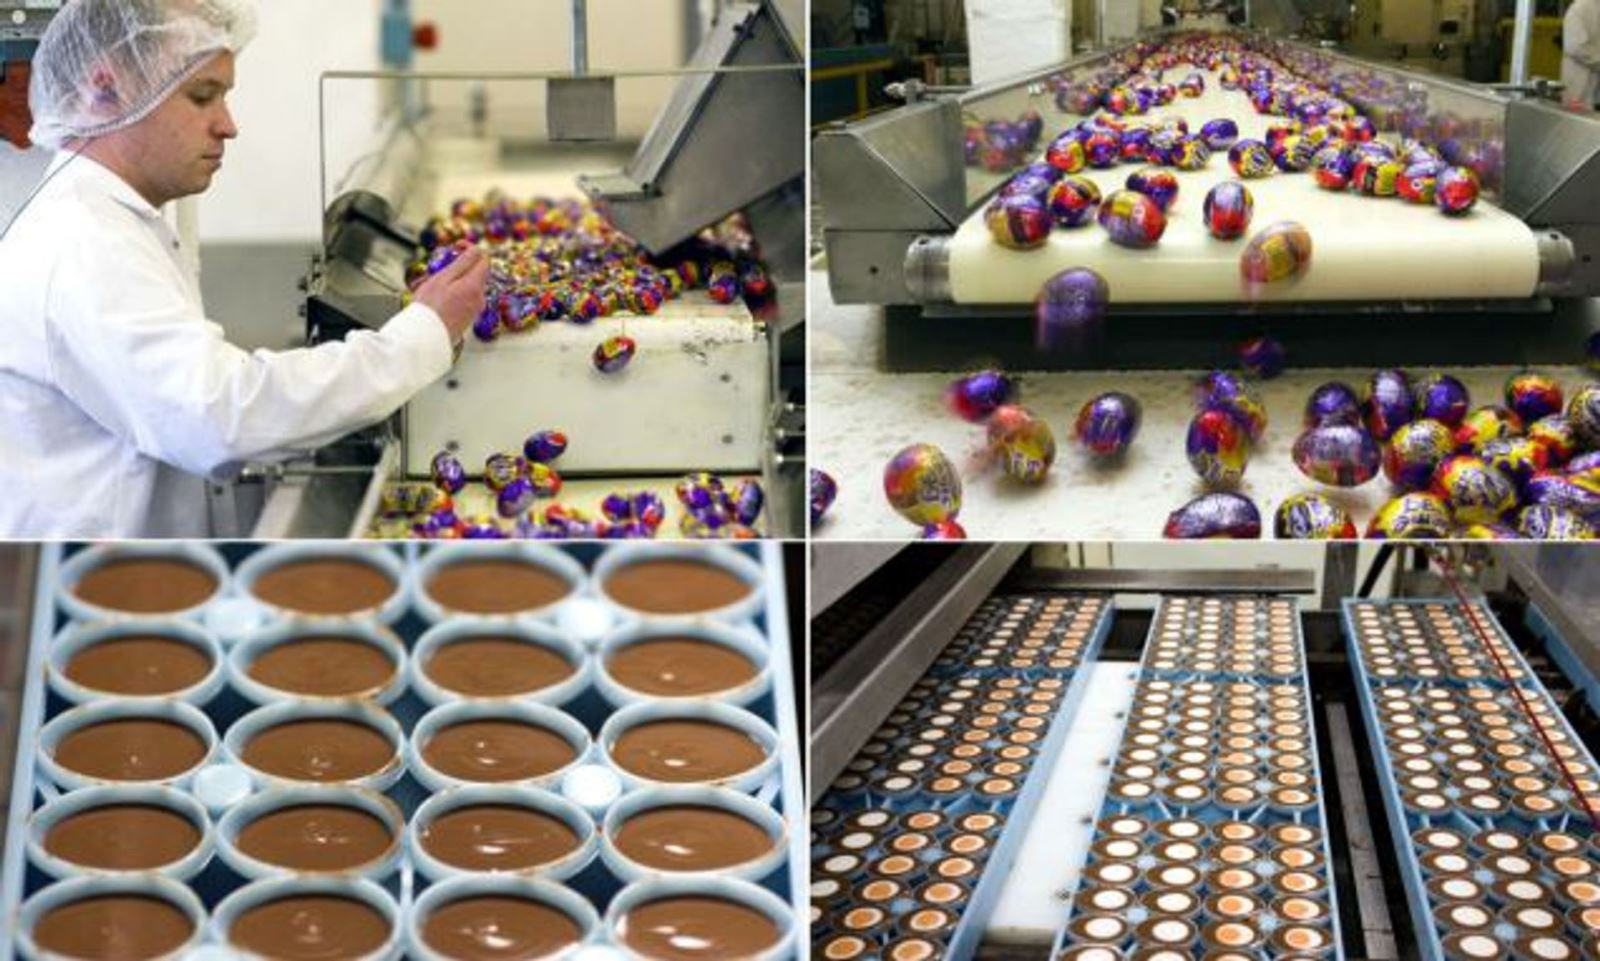 Bachmann шоколадная фабрика. Шоколадная фабрика Кэдбери. Фабрика Кэдбери Англия. Cadbury шоколад фабрика. Шоколадная фабрика в Англии.